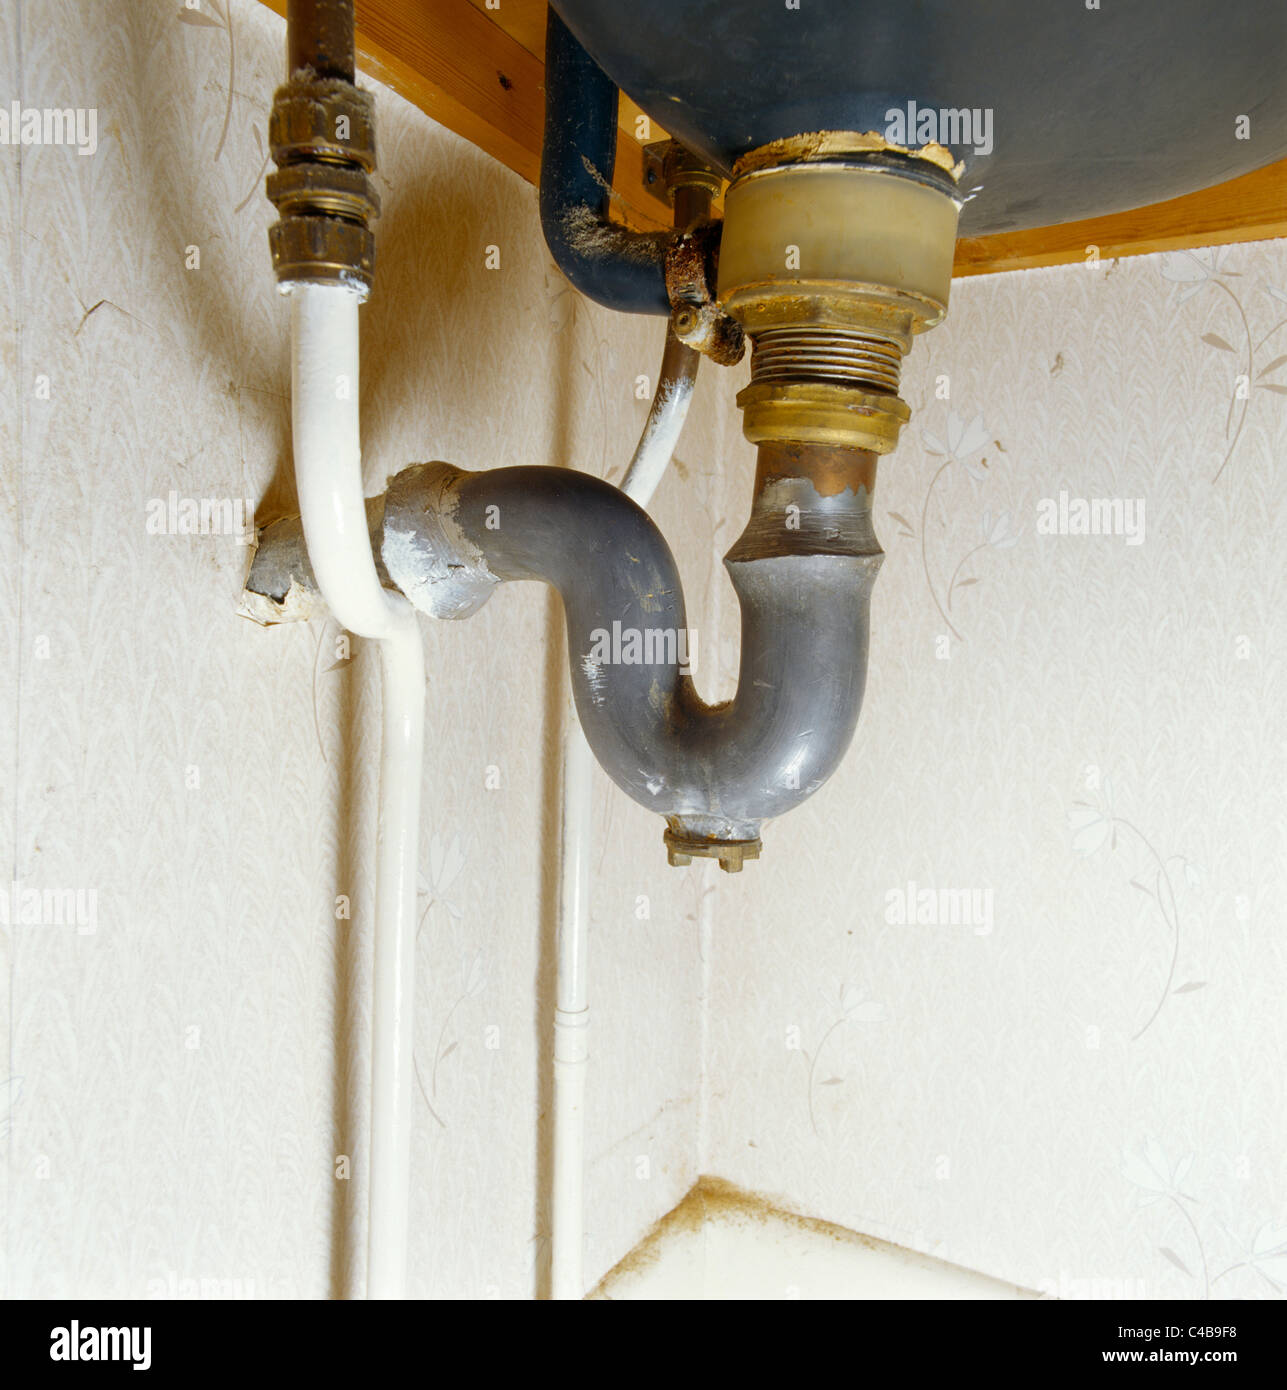 U Bend Pipe Under Sink Stock Photo 37128316 Alamy